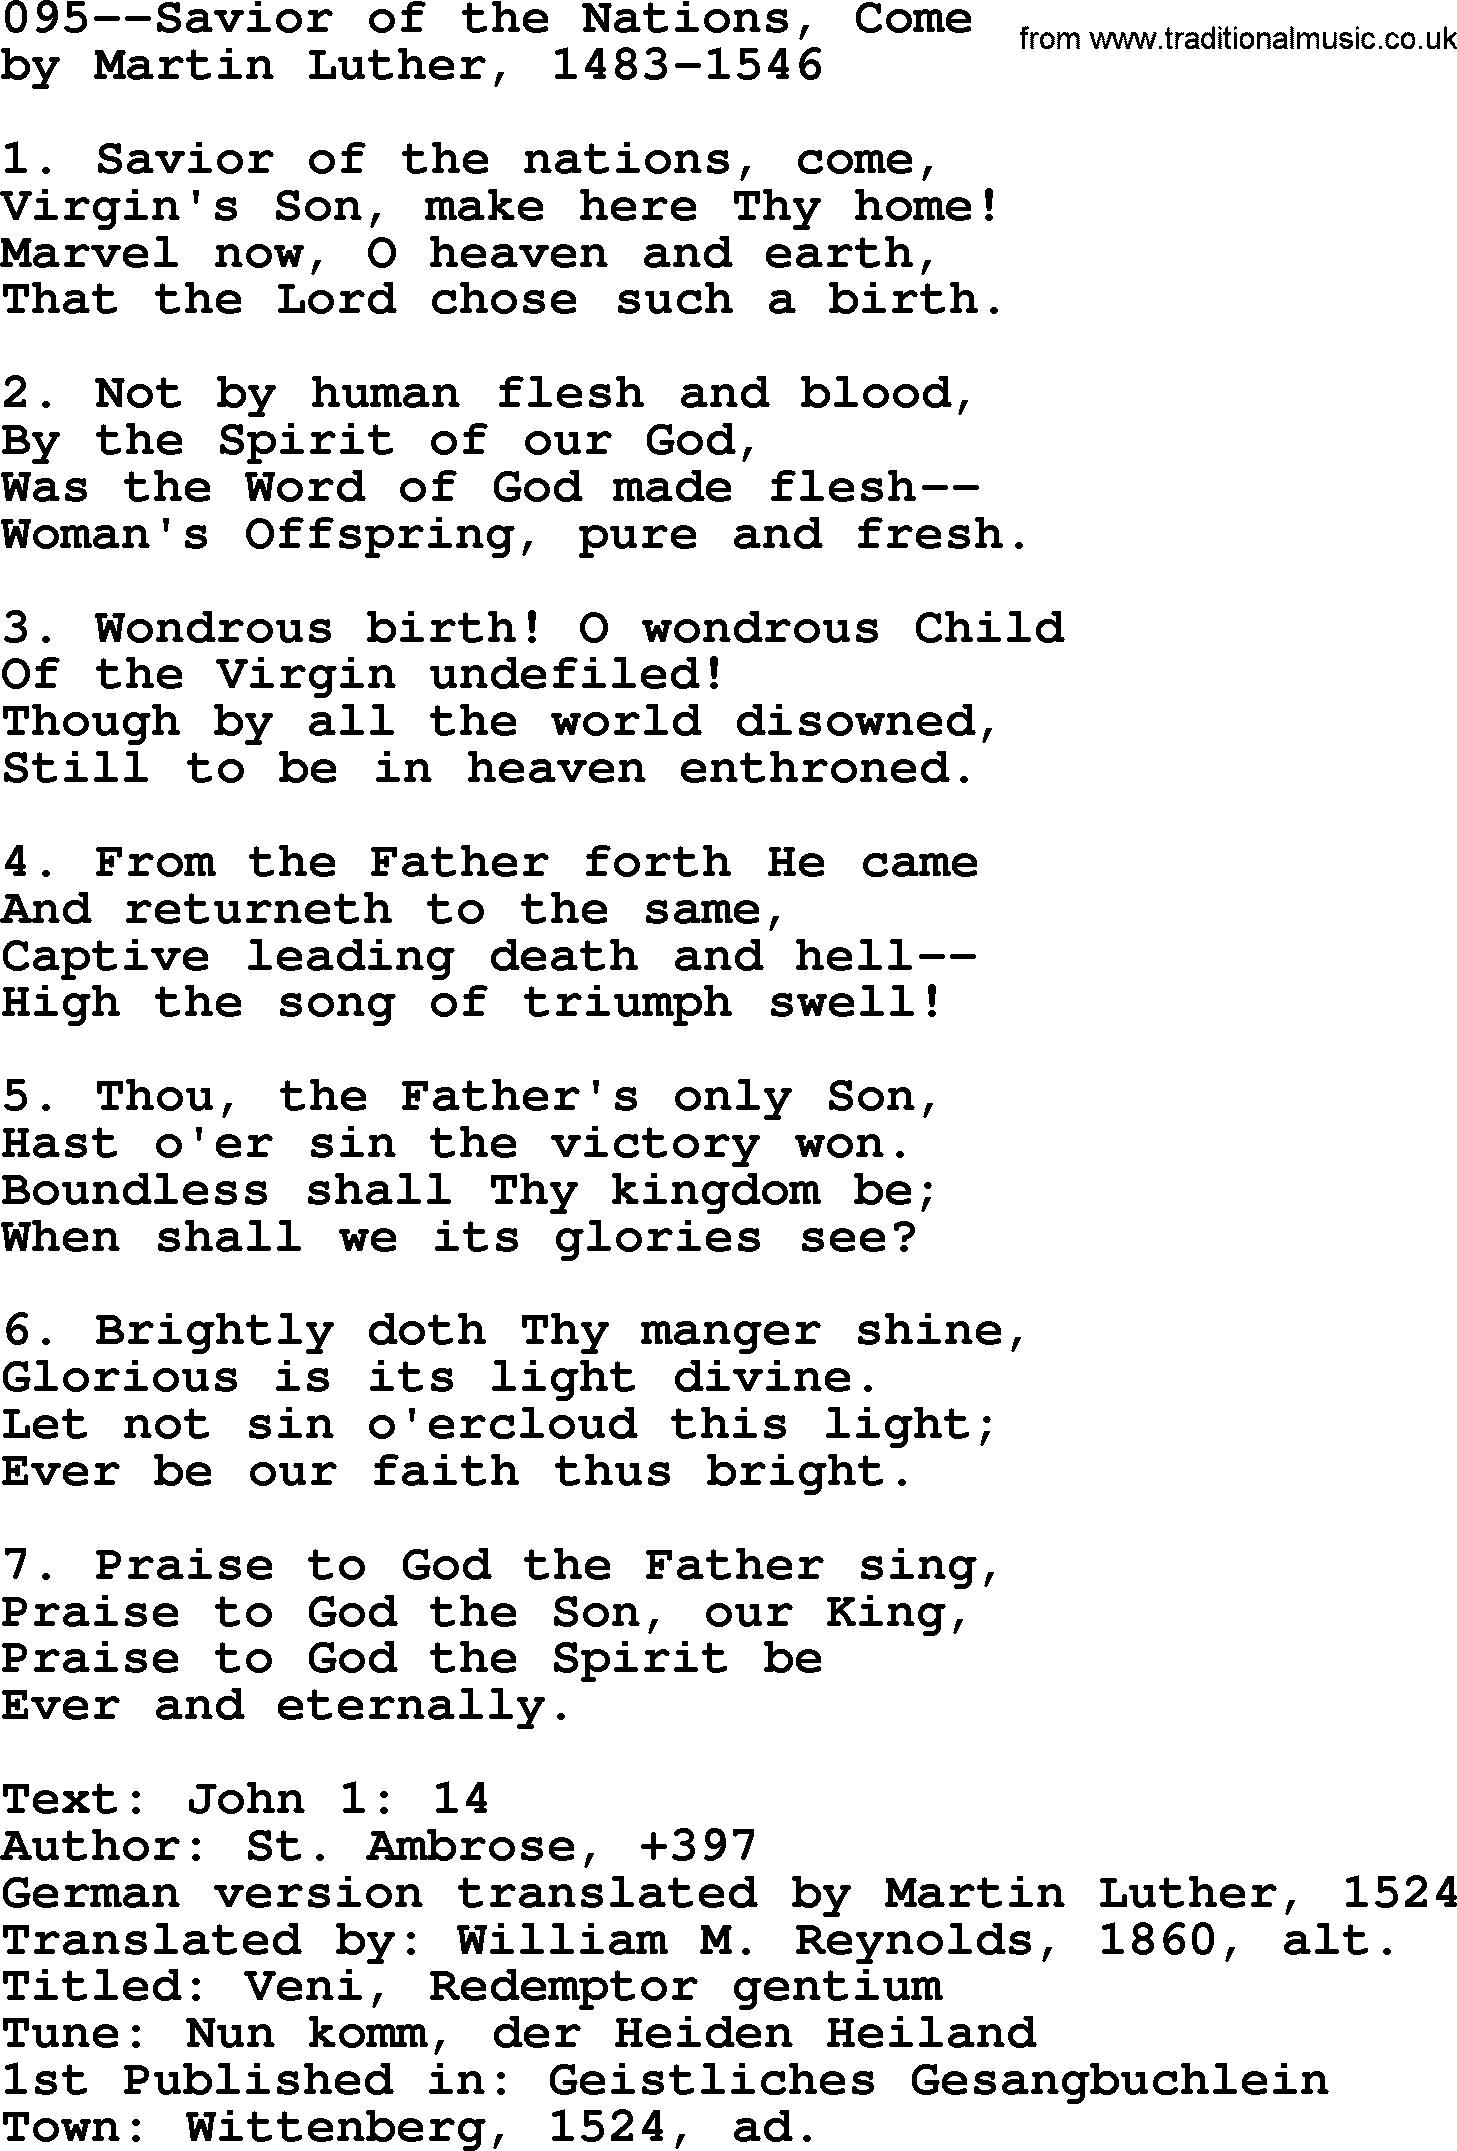 Lutheran Hymn: 095--Savior of the Nations, Come.txt lyrics with PDF